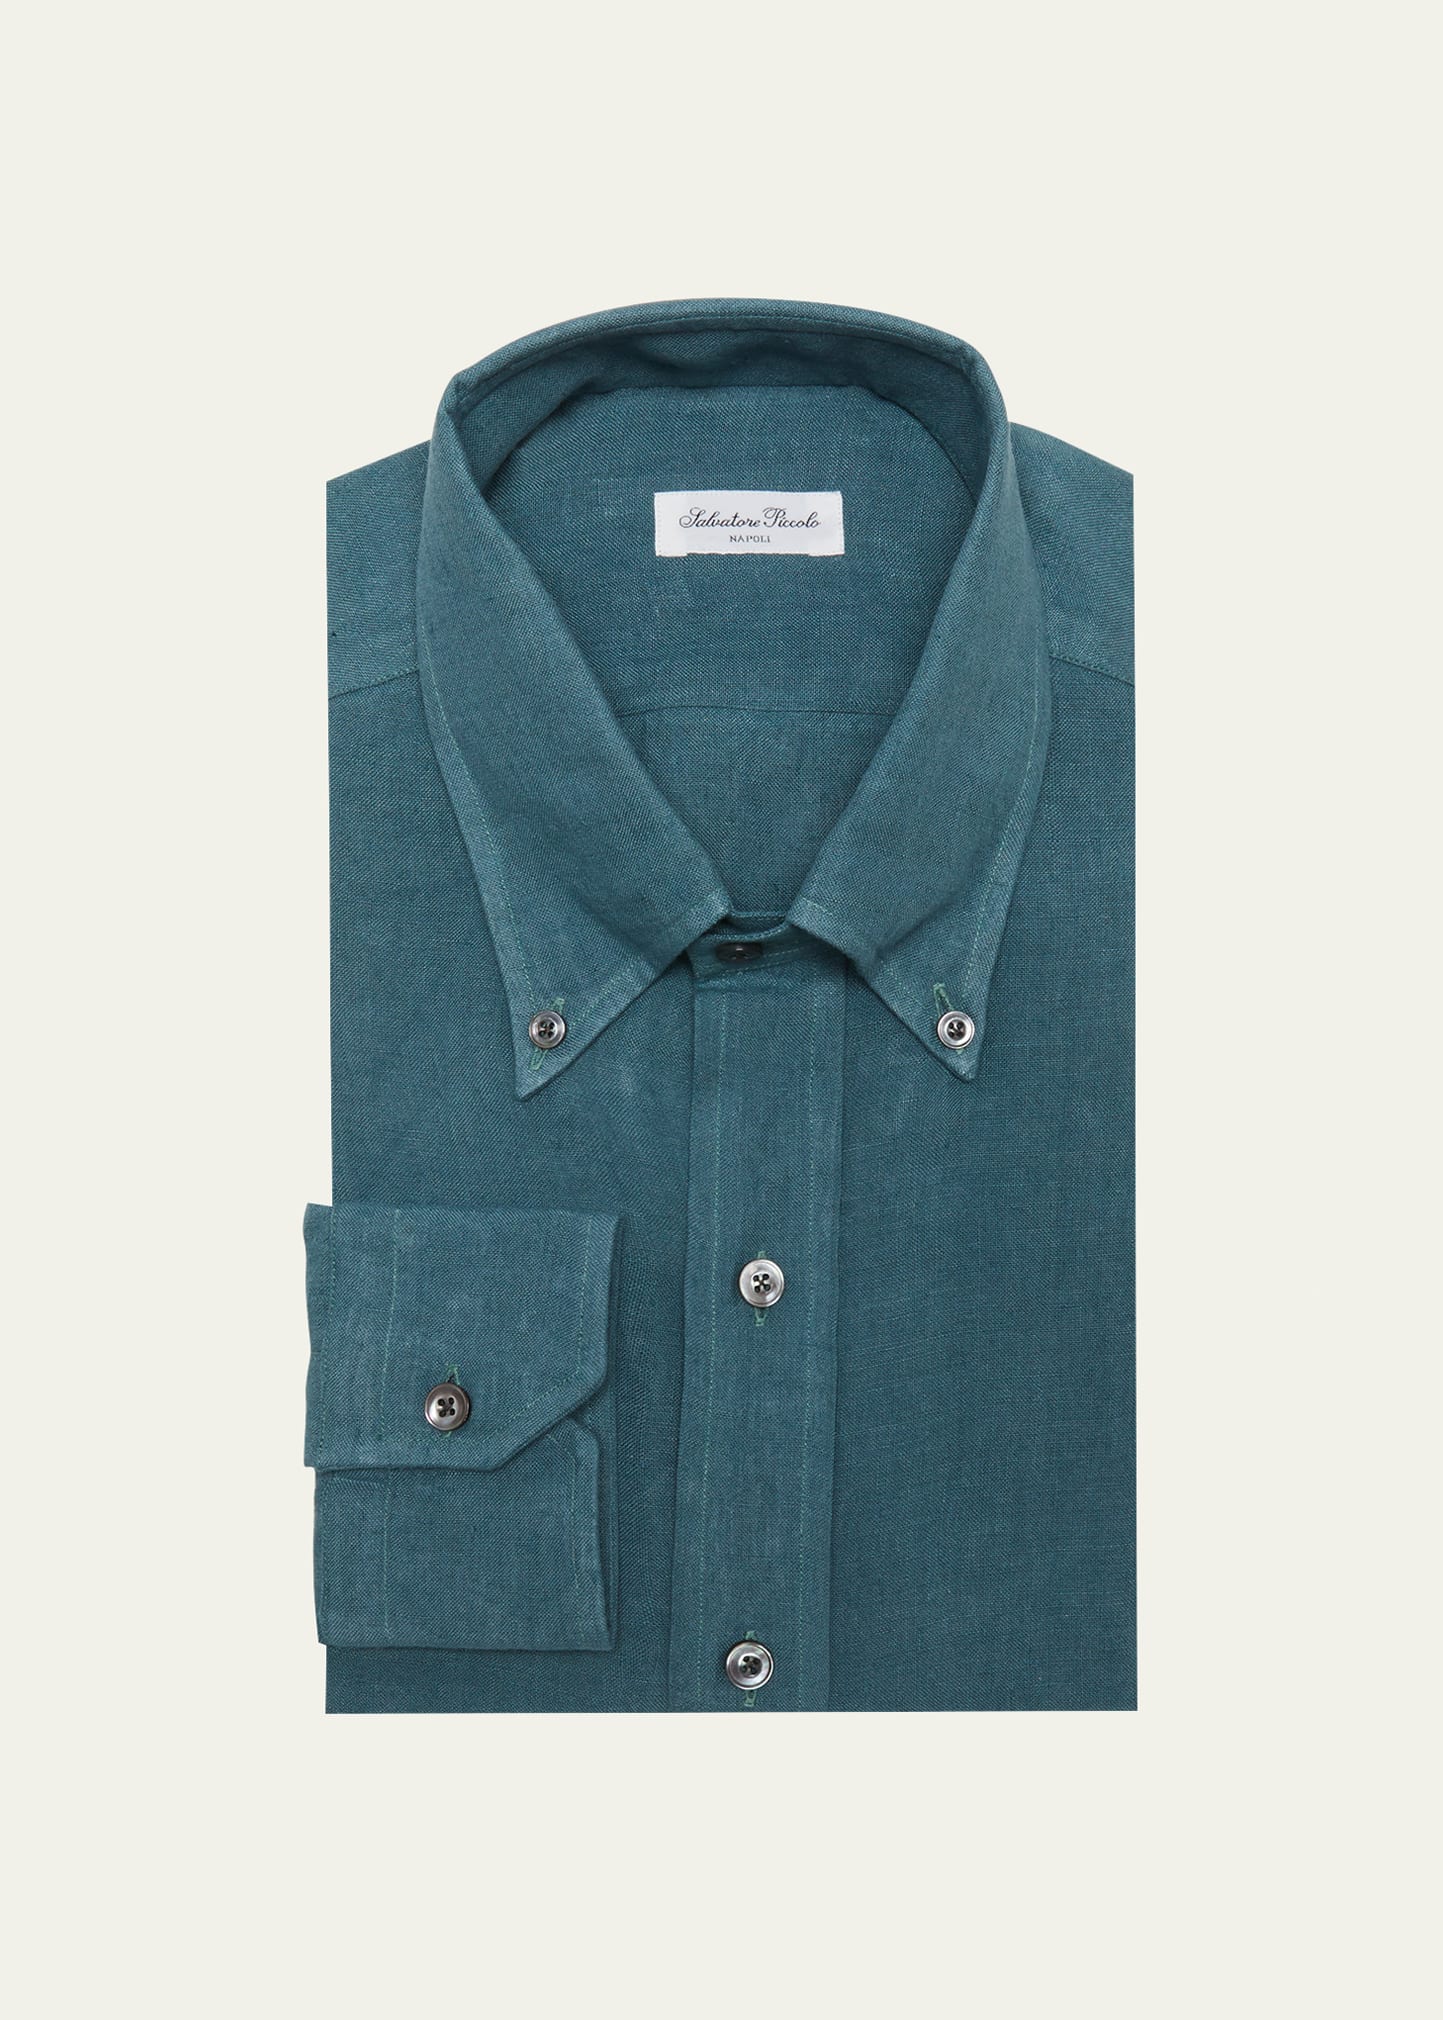 Salvatore Piccolo Men's Button-down Collar Linen Dress Shirt In Avion Blue